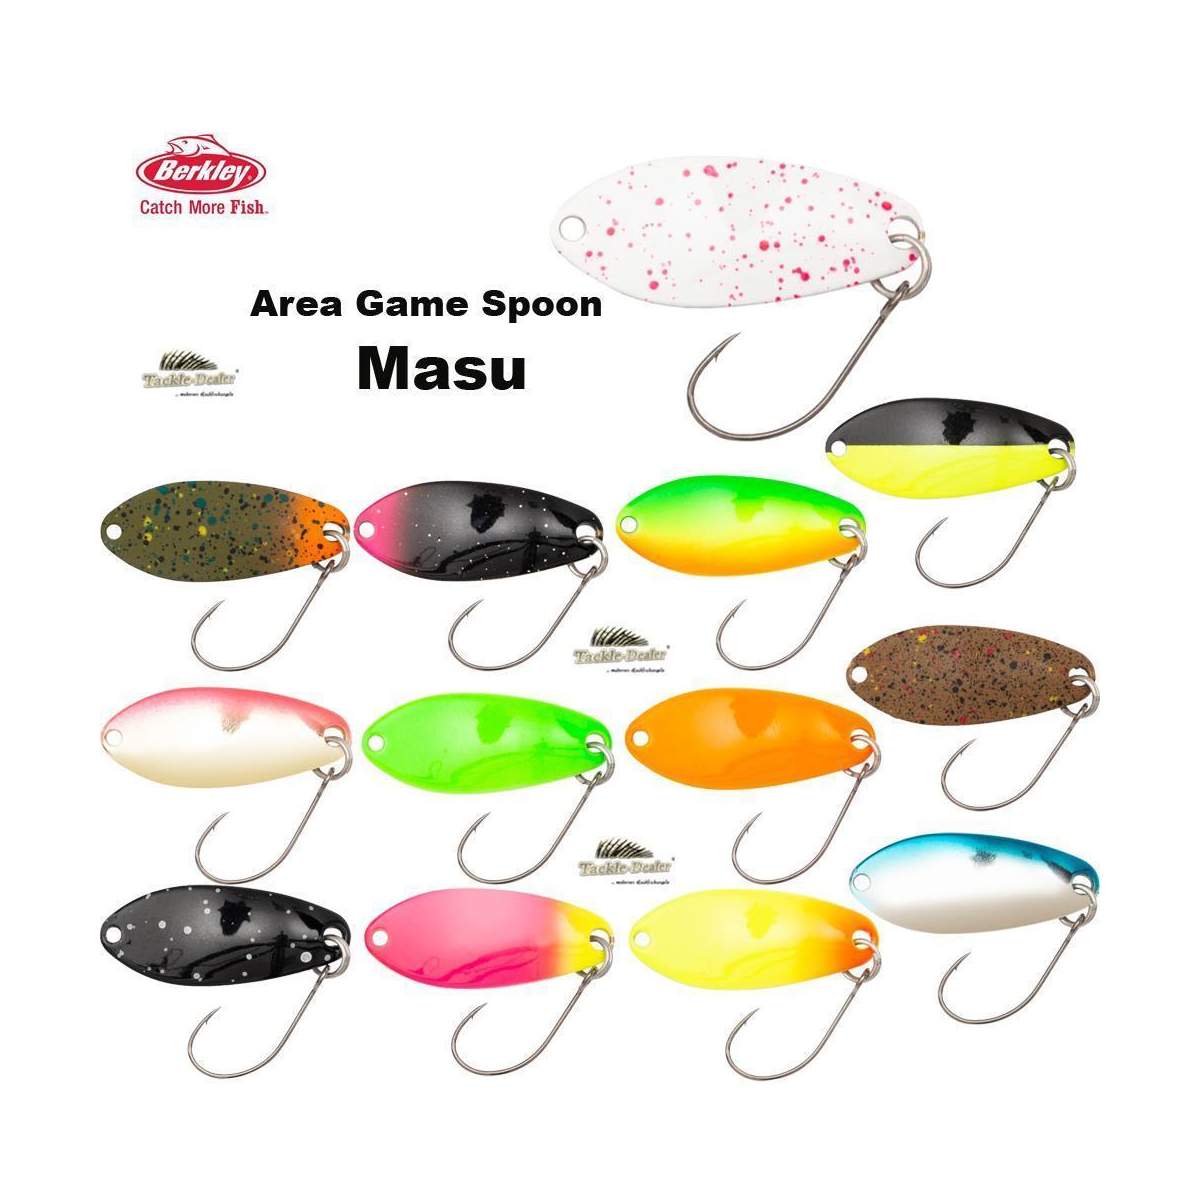 Cuchara ondulante Berkley® Area Game Spoon MASU 2,5 gr